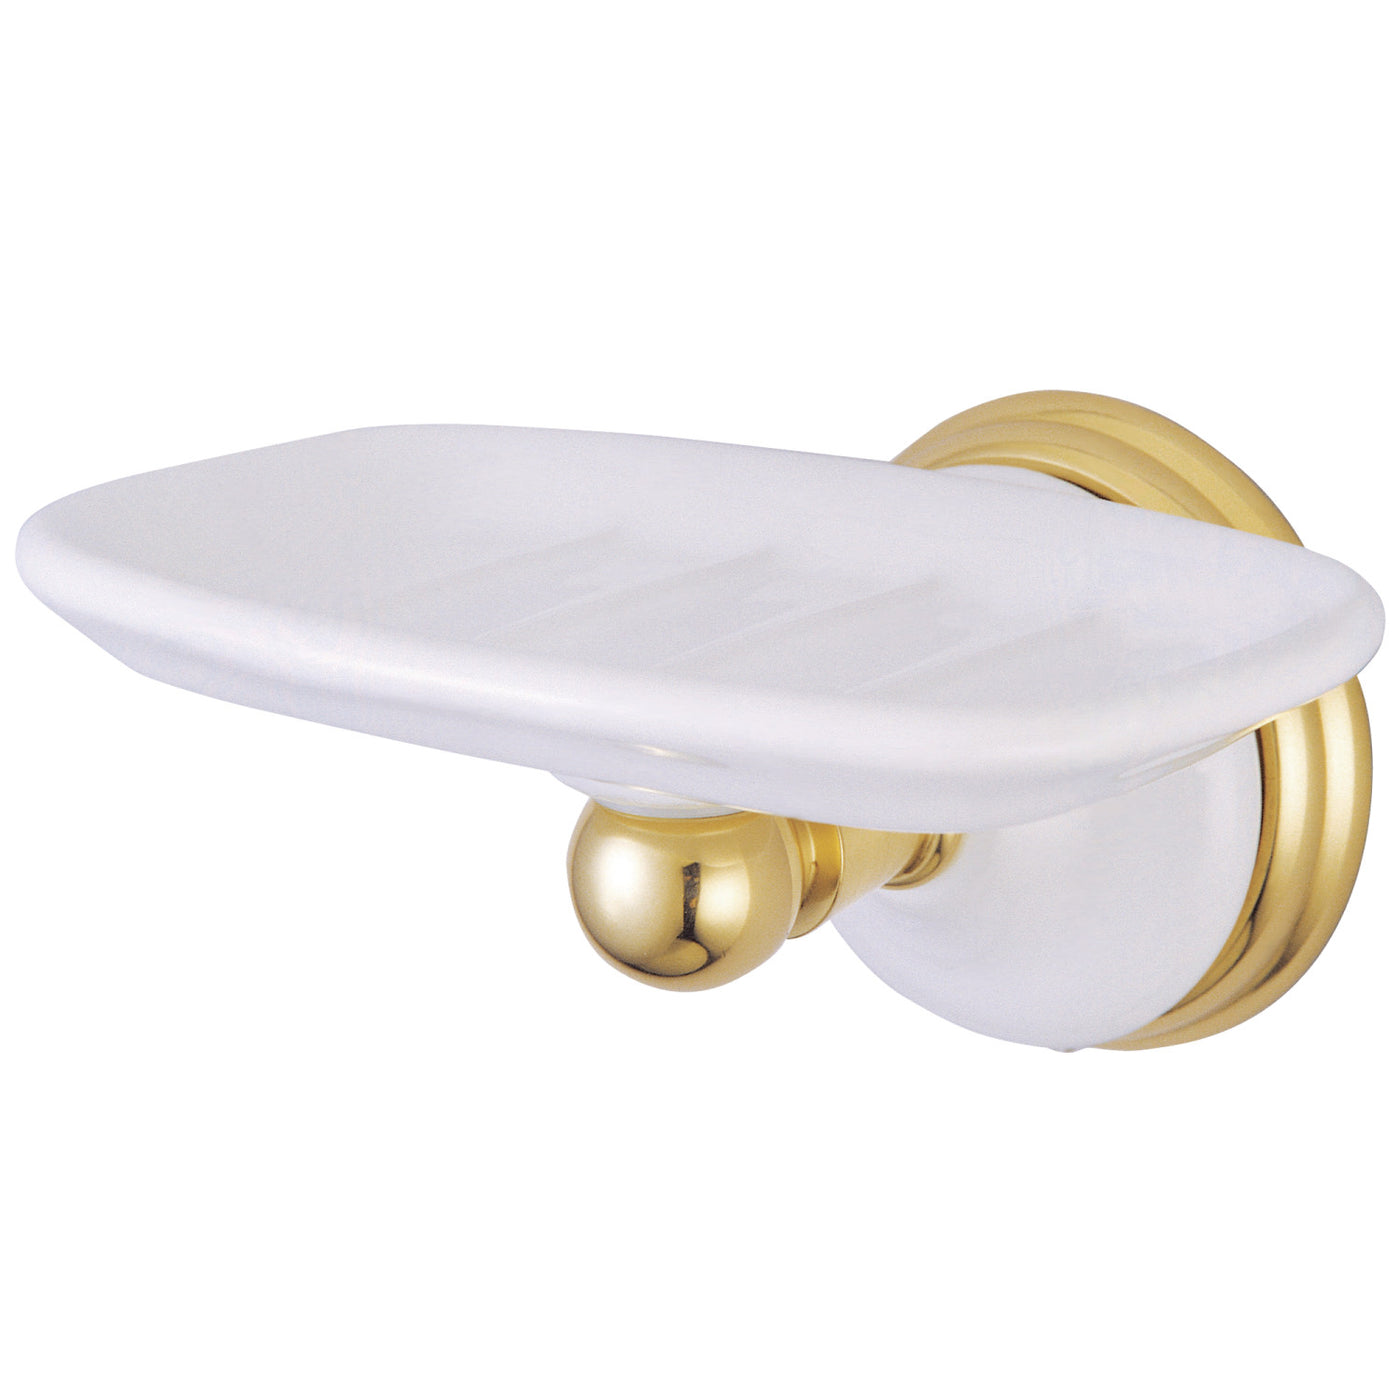 Elements of Design EBA1115PB Wall-Mount Soap Dish Holder, Polished Brass